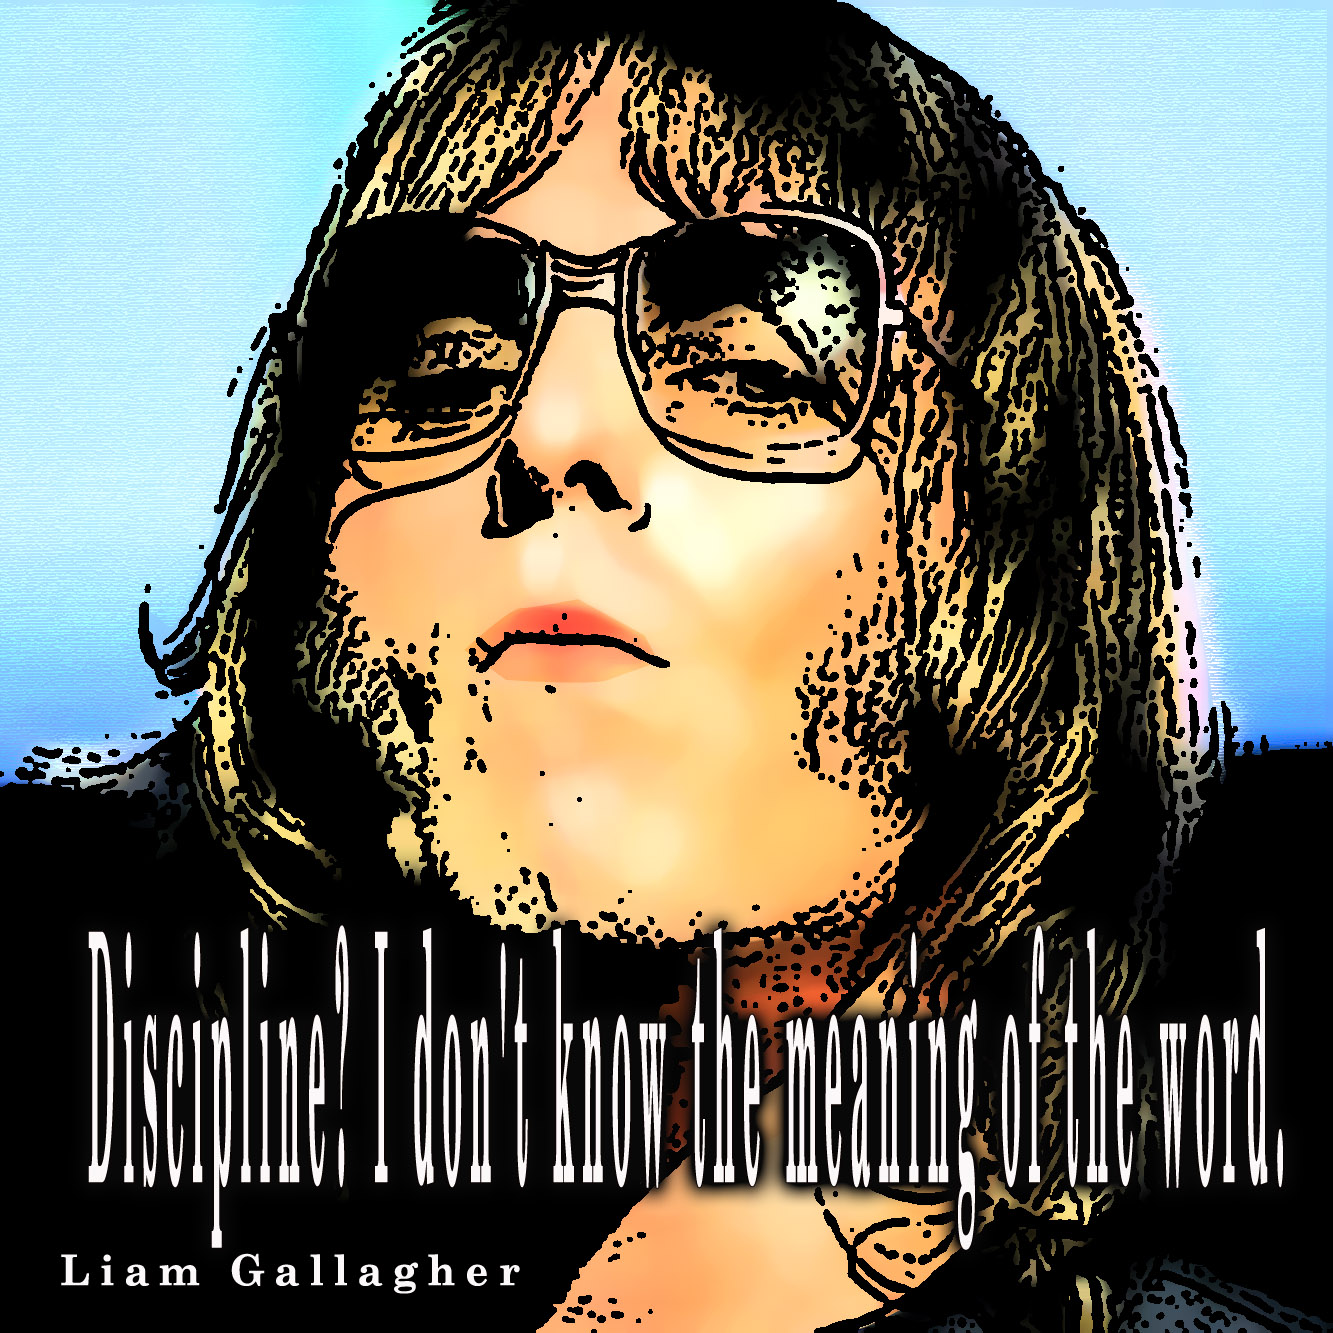 Liam Gallagher's quote #8